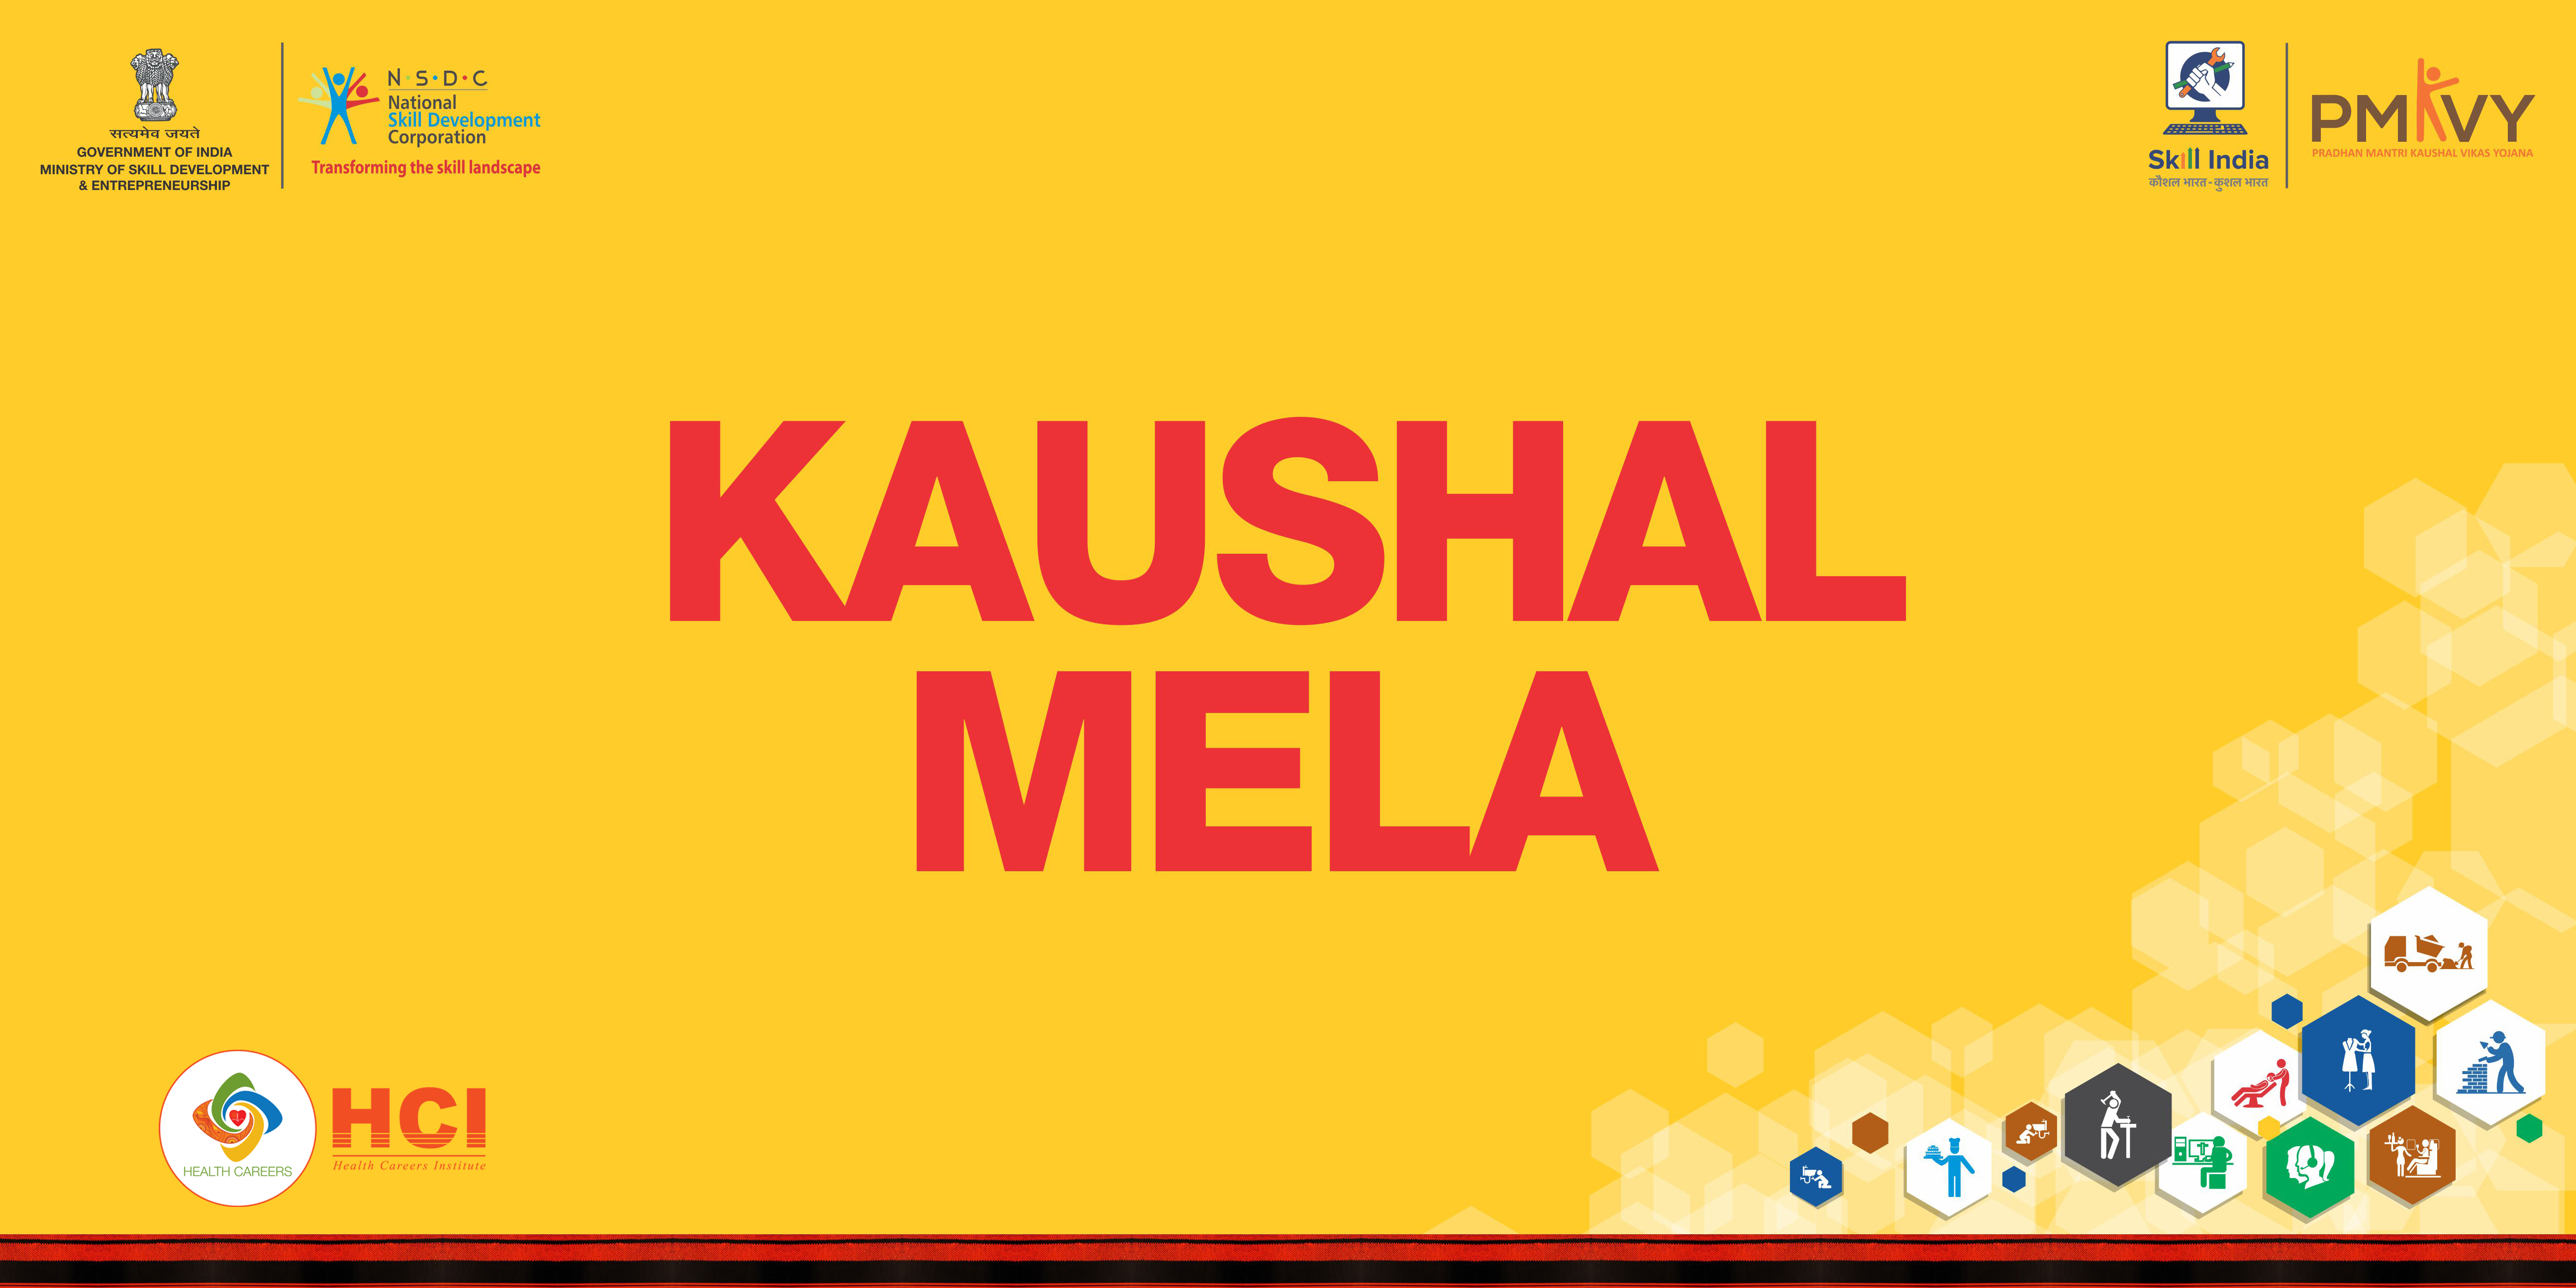 Kaushal Mela 2017 on 8th April, 2017 at Mattancherry,Kochi